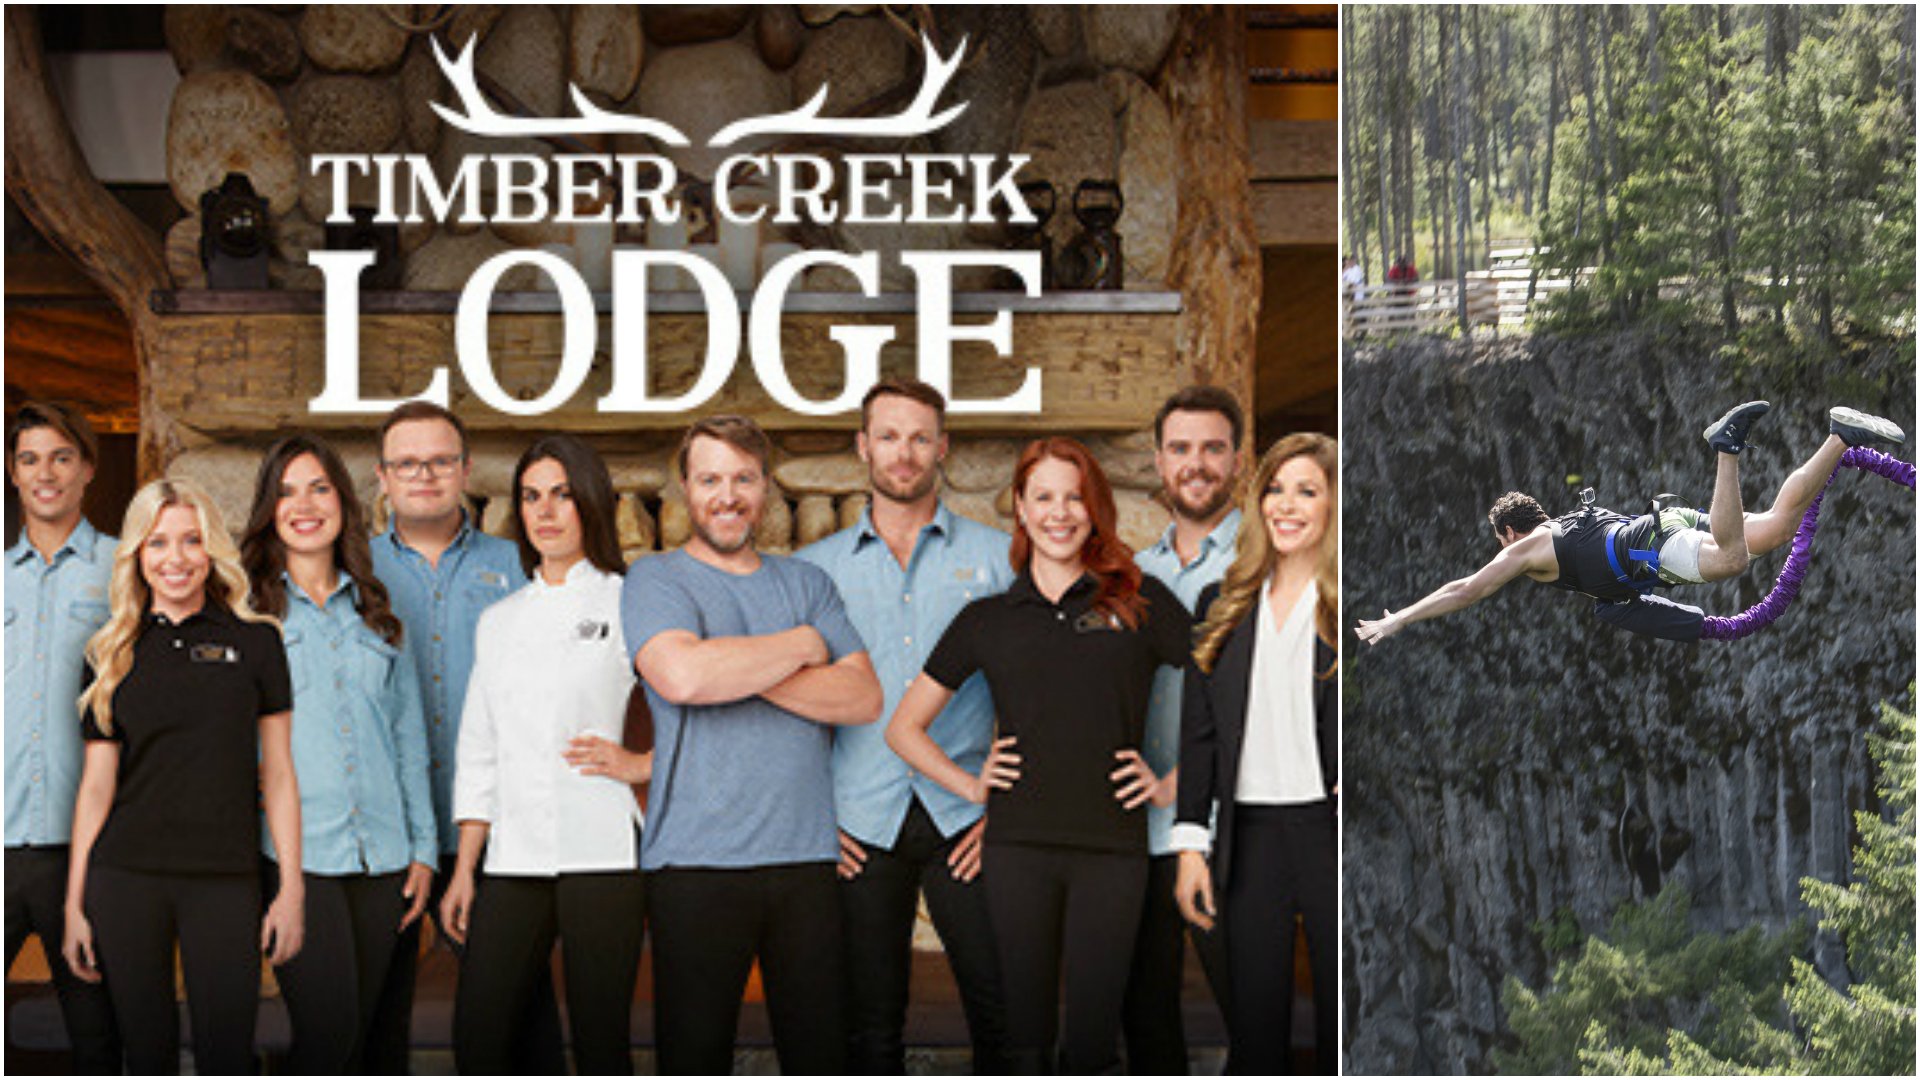 Welcome to “Timber Creek Lodge”